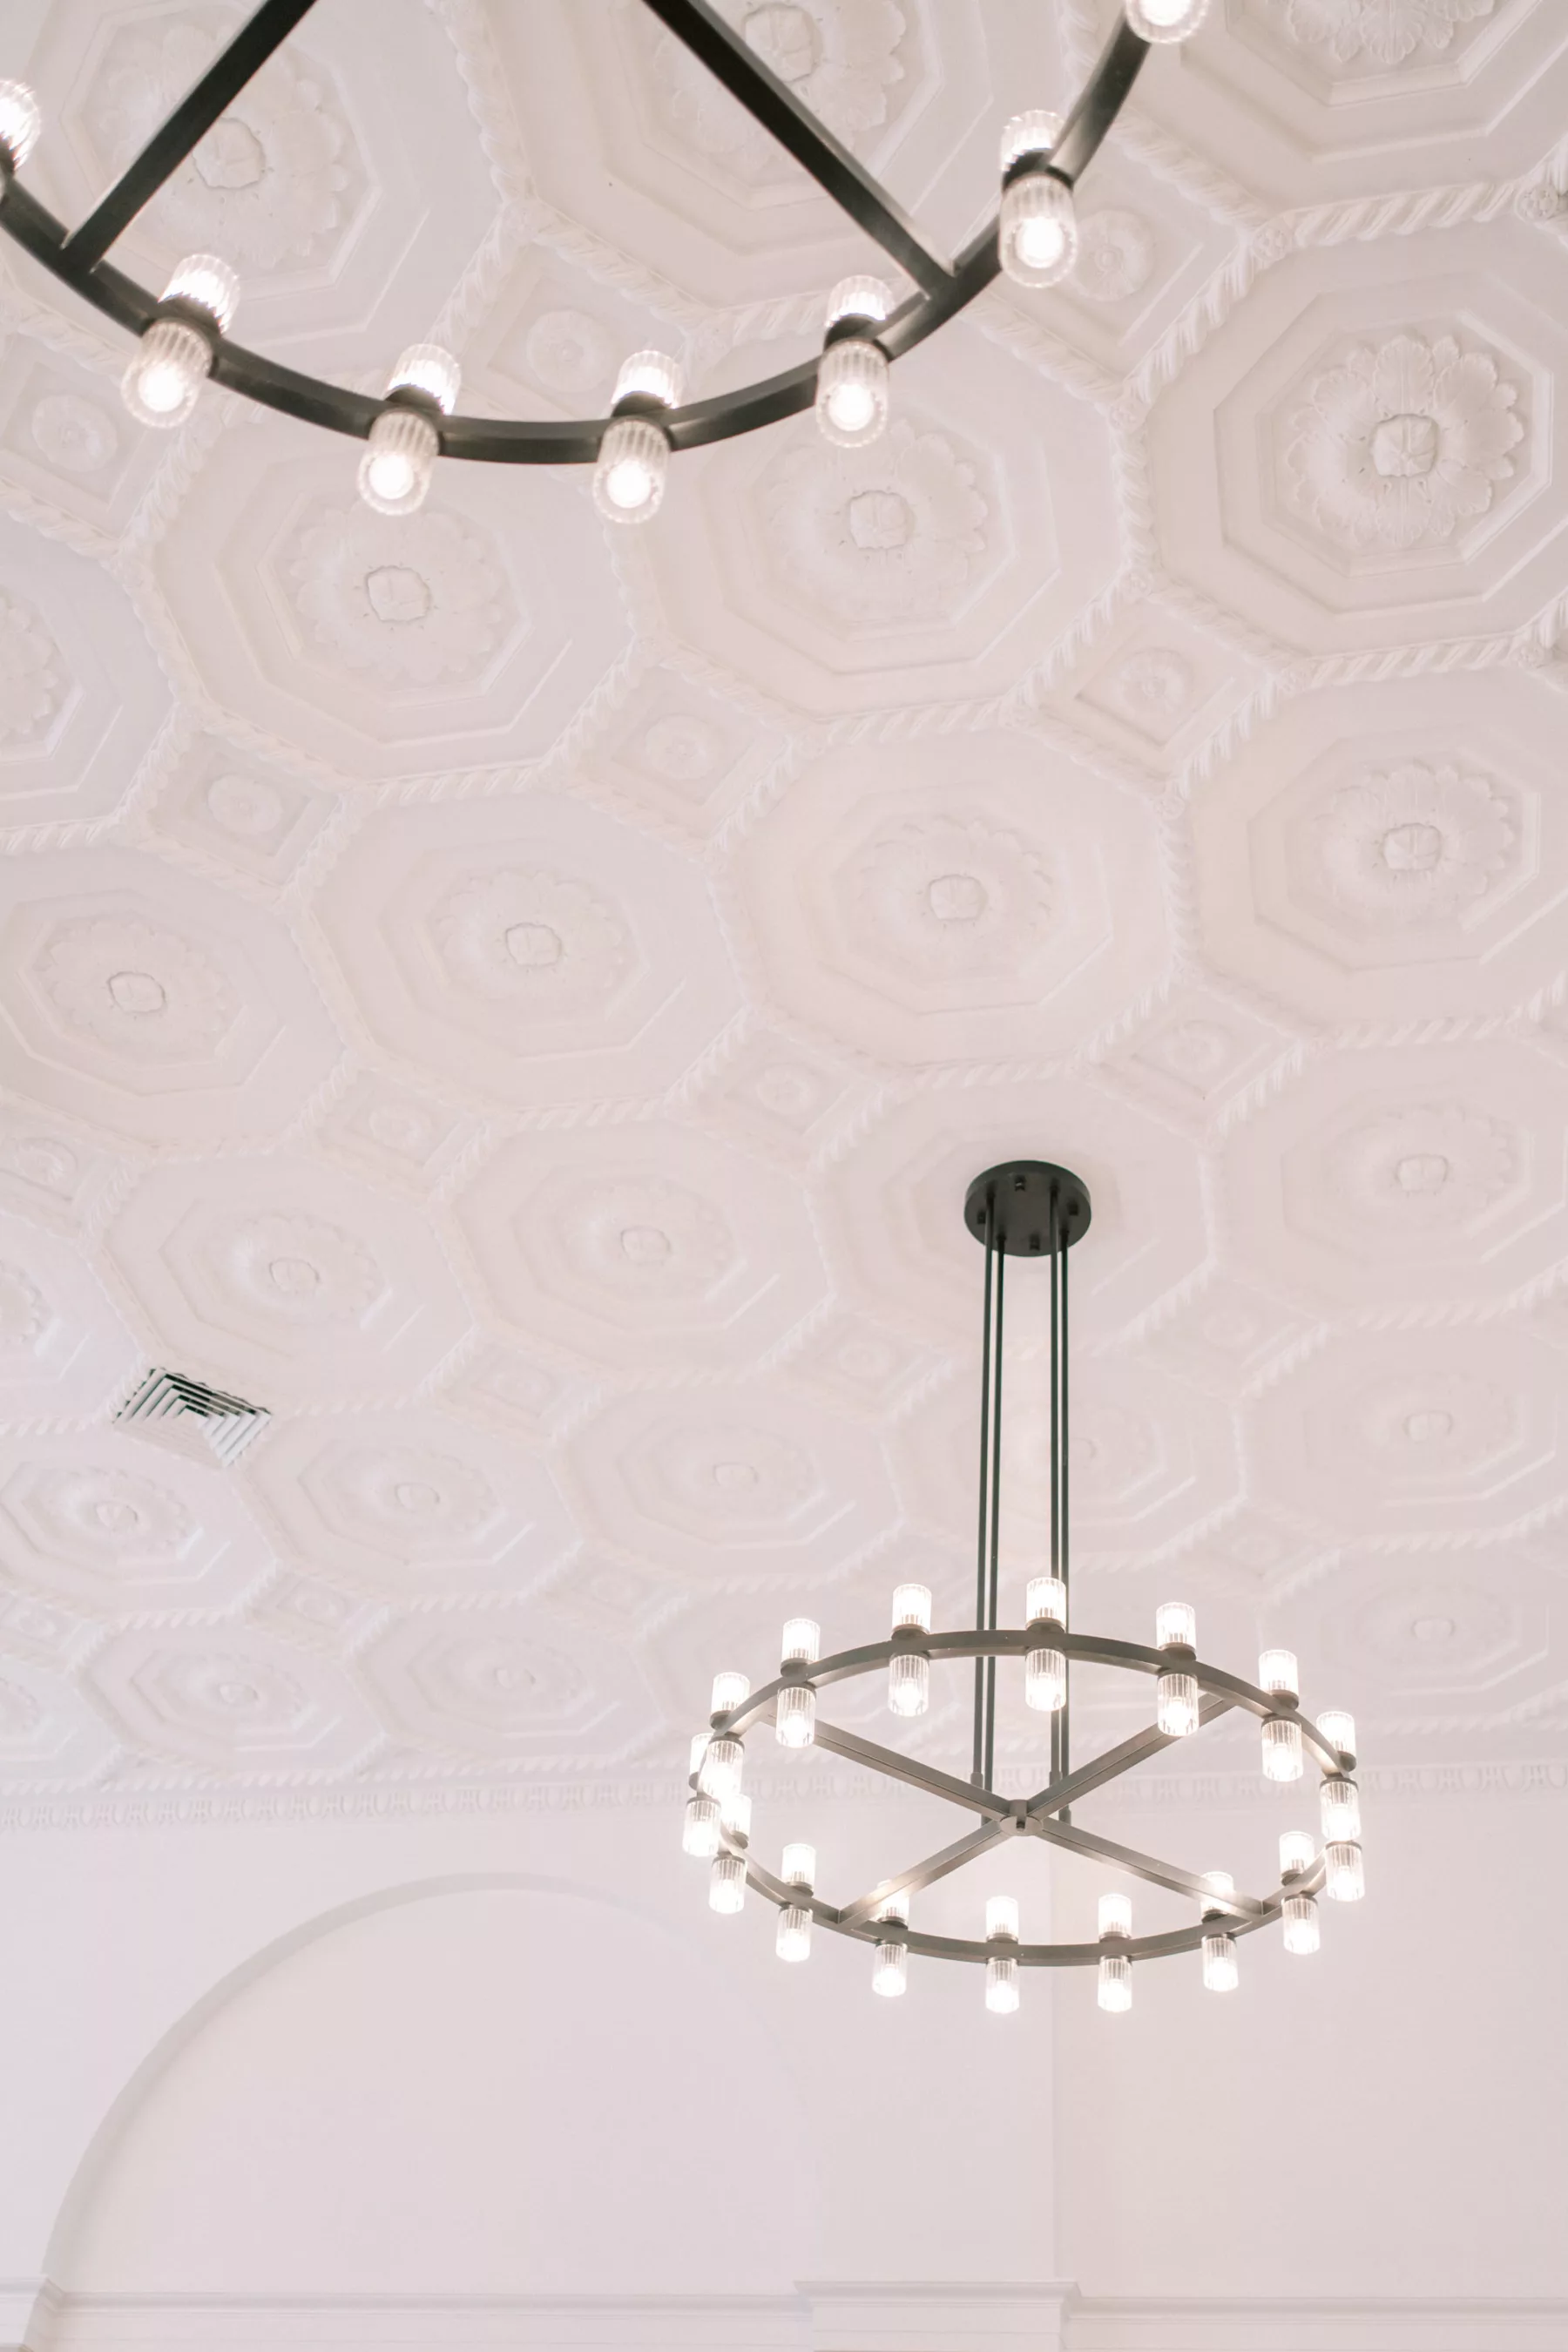 Modern Black Chandelier Lighting for Indoor Great Gatsby Wedding Ceremony | Tampa Bay Event Venue Hotel Flor